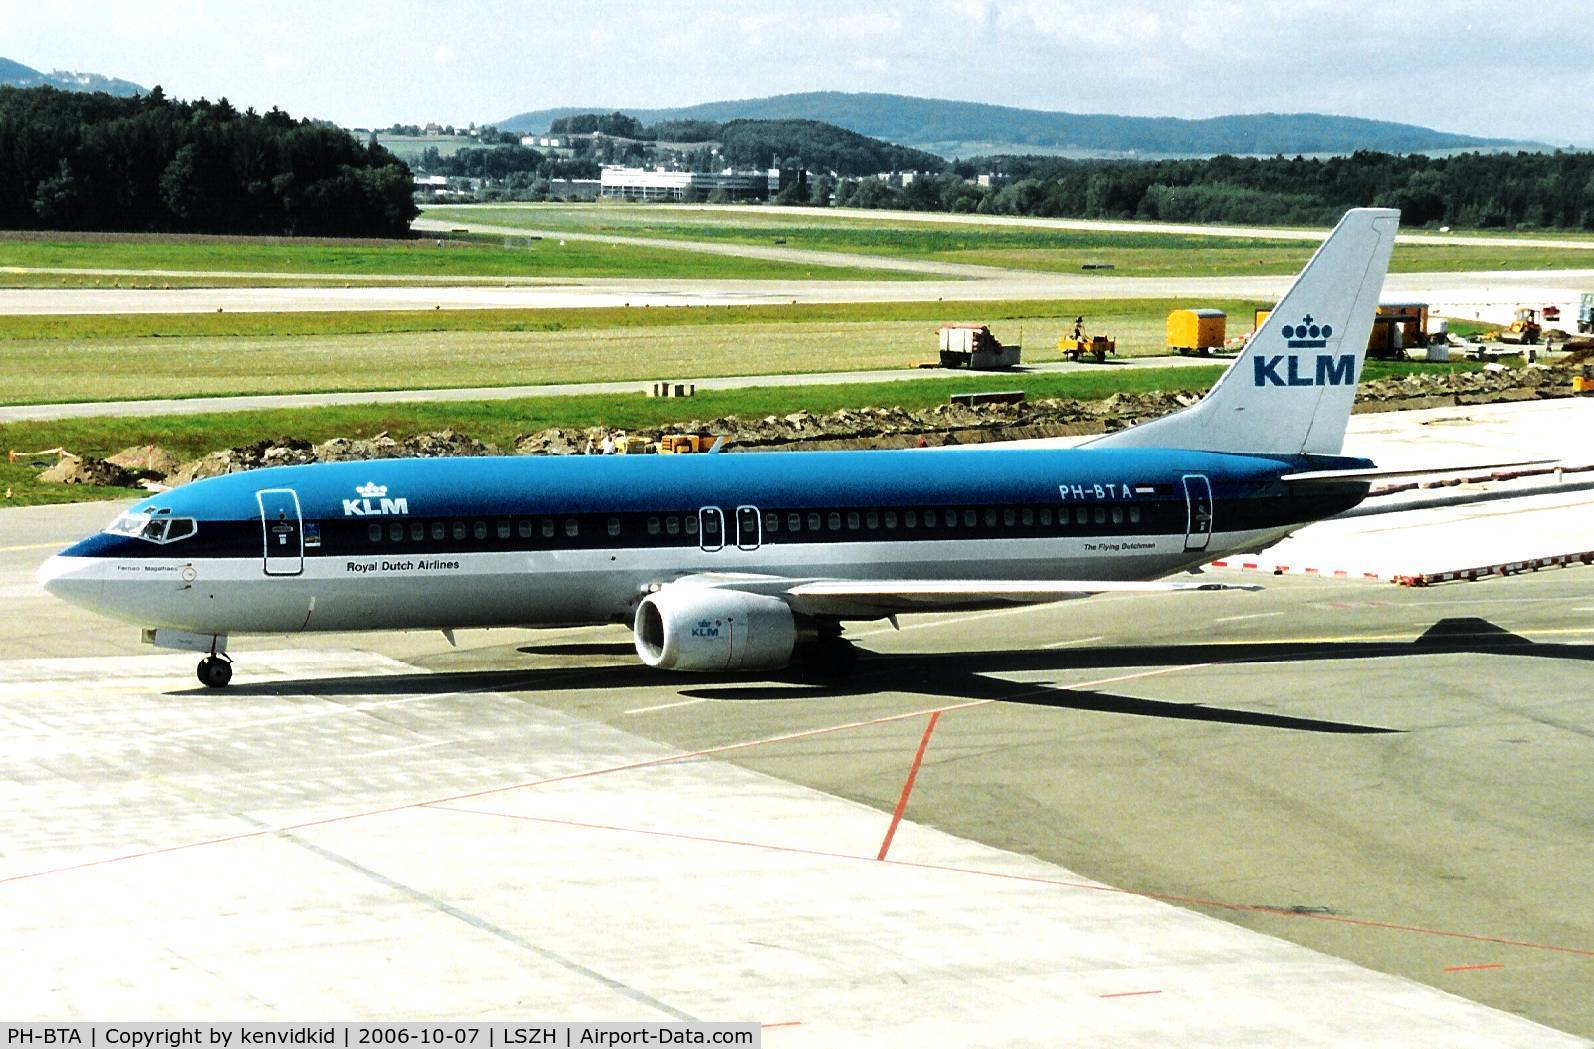 PH-BTA, 1991 Boeing 737-406 C/N 25412, KLM Royal Dutch Airlines